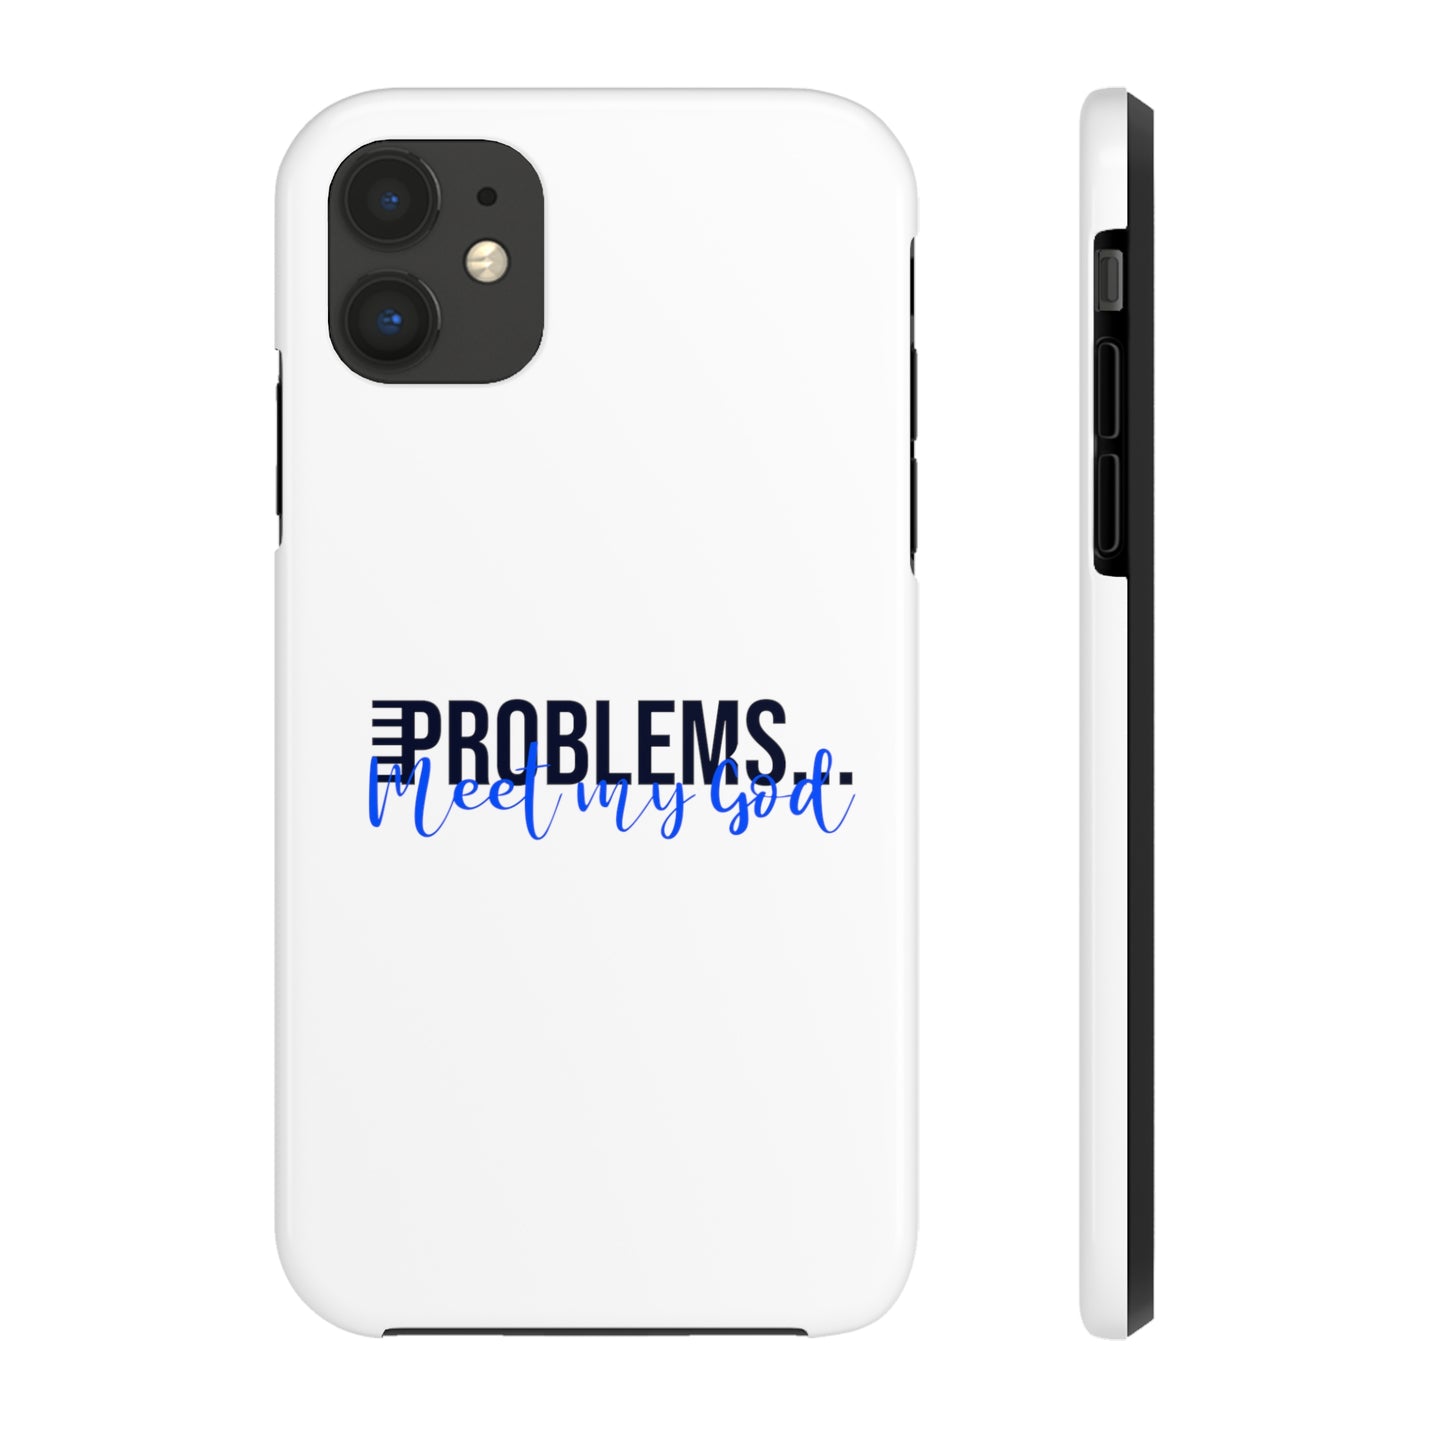 Problems Meet My God Tough Phone Cases, Case-Mate